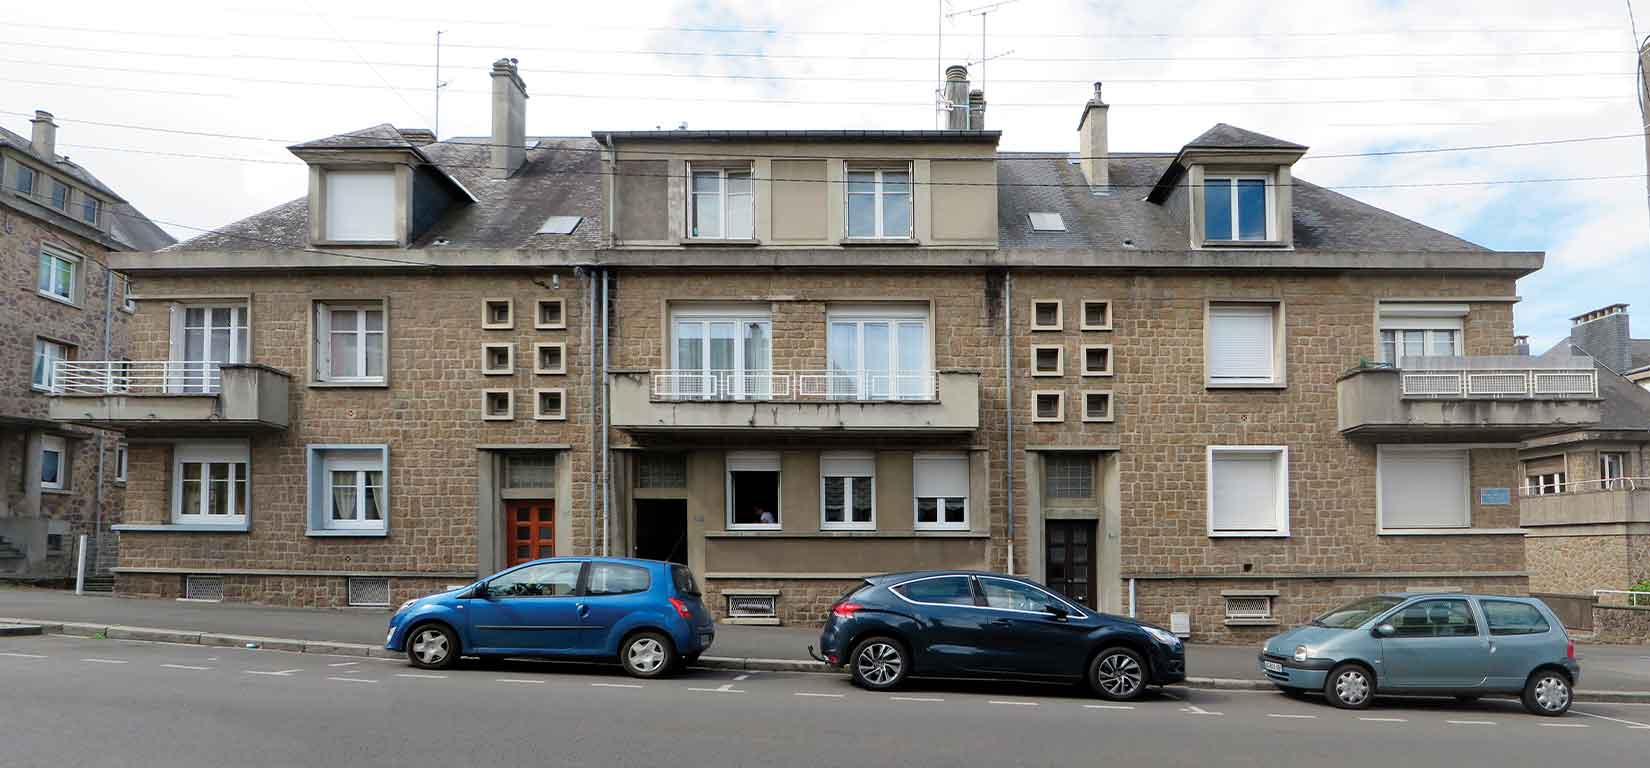 Immeuble classique de la reconstruction avenue de la gare Vire Normandie - Credits CAUE 14